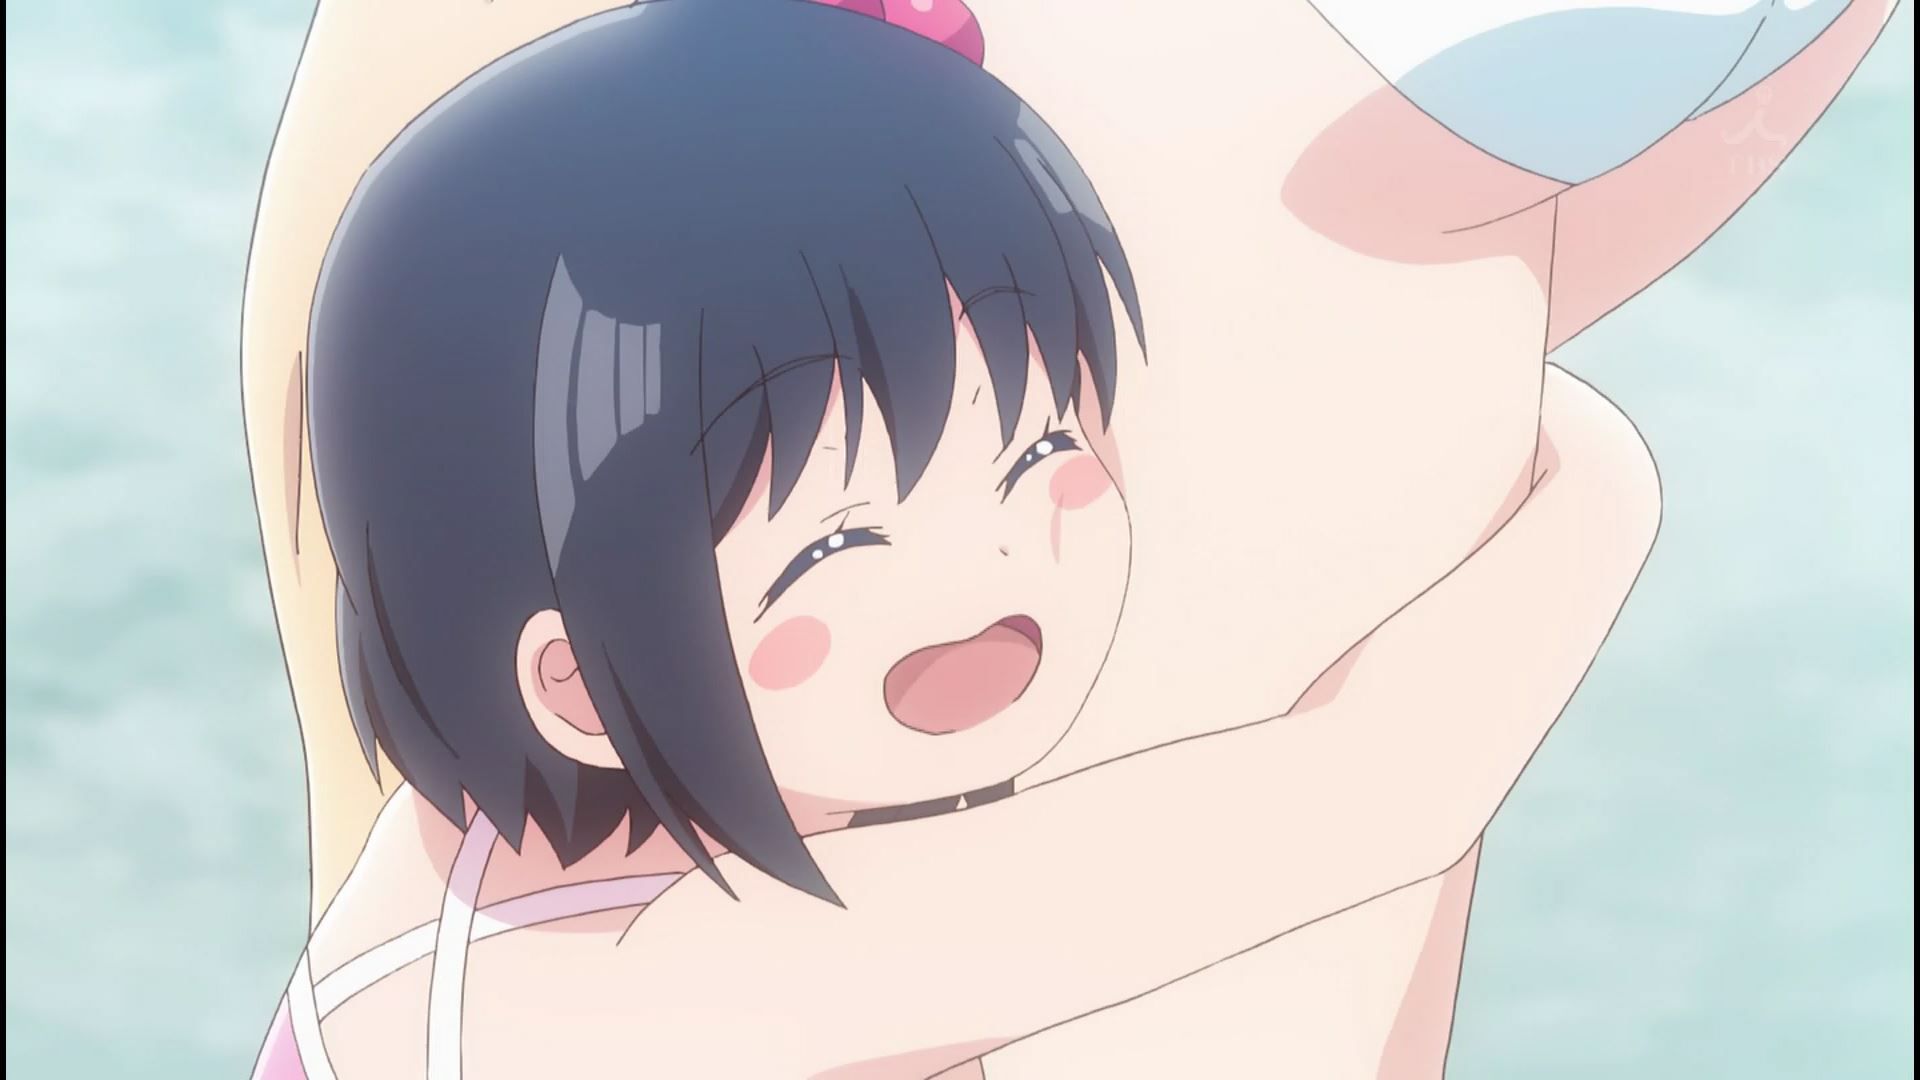 Anime [Kawanagi girl] 8 erotic swimsuit scene of erotic breasts of girls in the story! 24